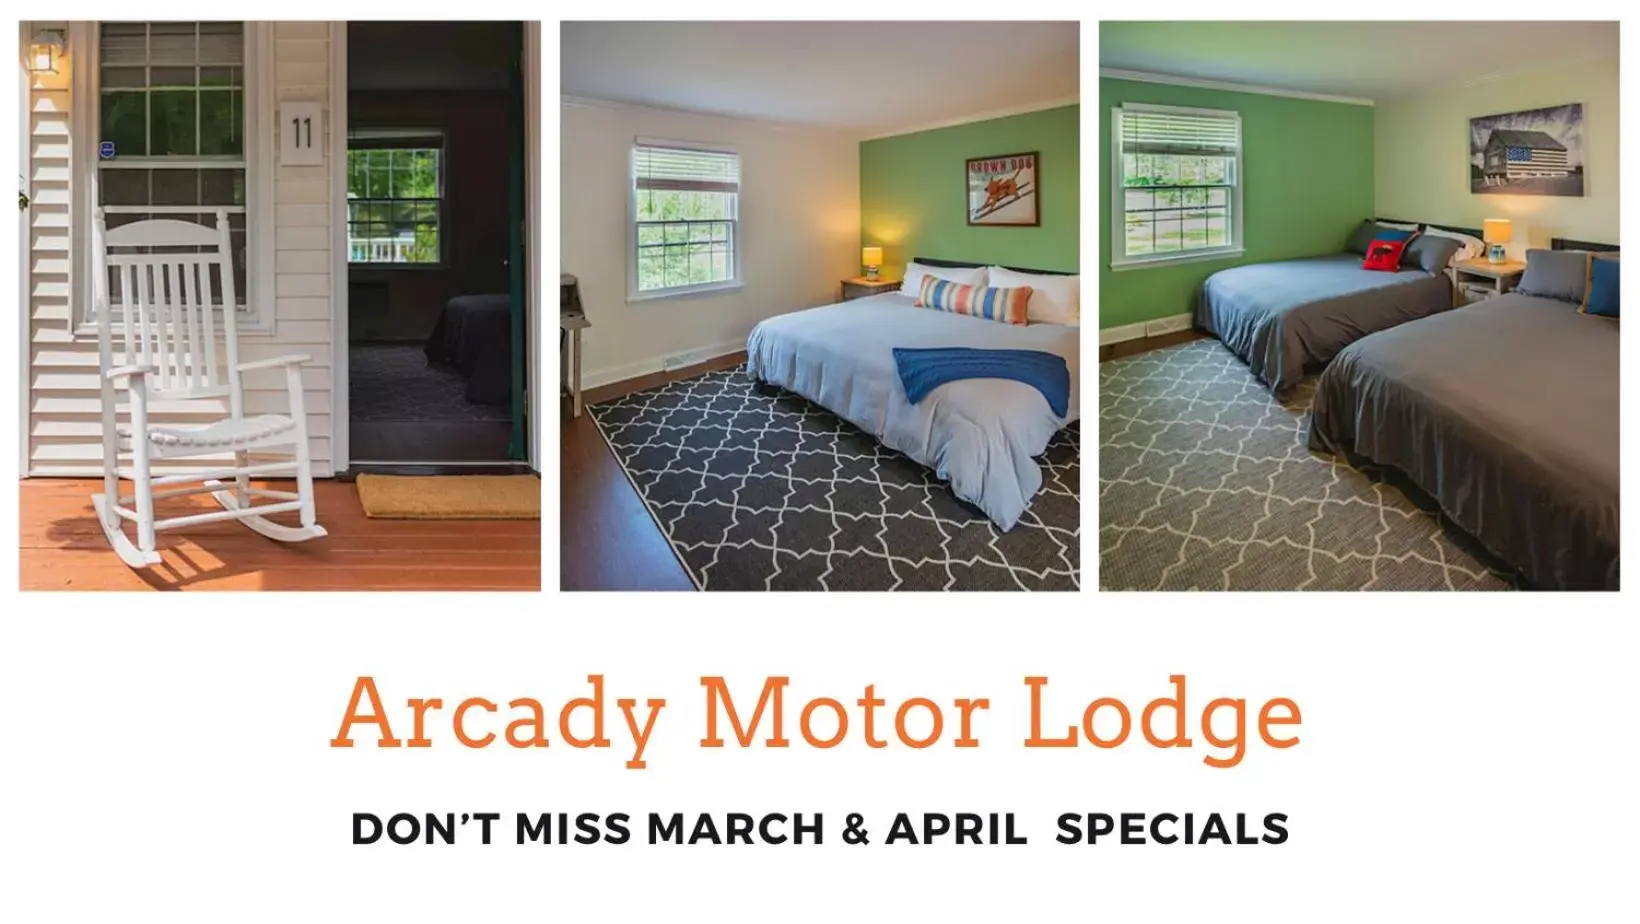 Arcady Mountain Motor Lodge